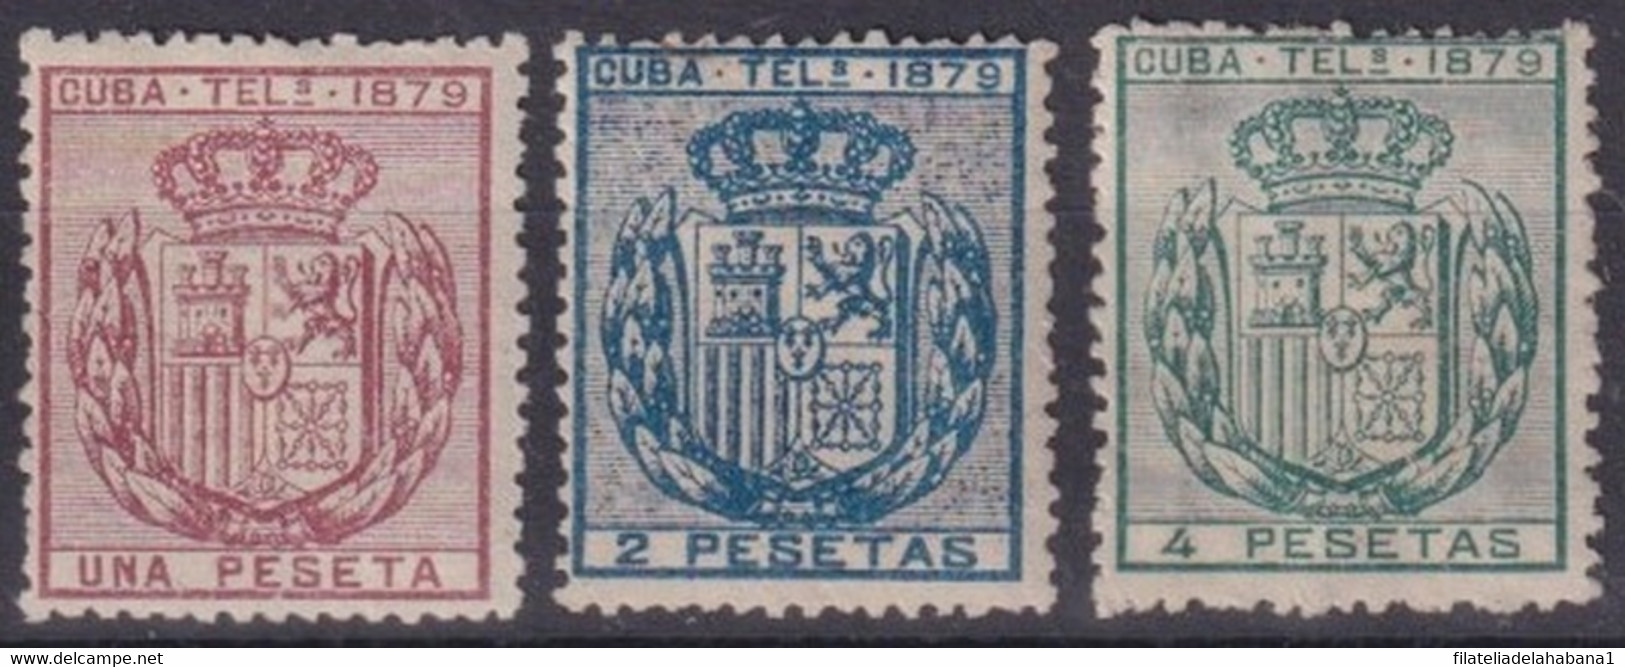 1879-166 CUBA SPAIN ESPAÑA 1879 COMPLETE SET TELEGRAPH TELEGRAFOS UNUSED NO GUM. - Telegraafzegels